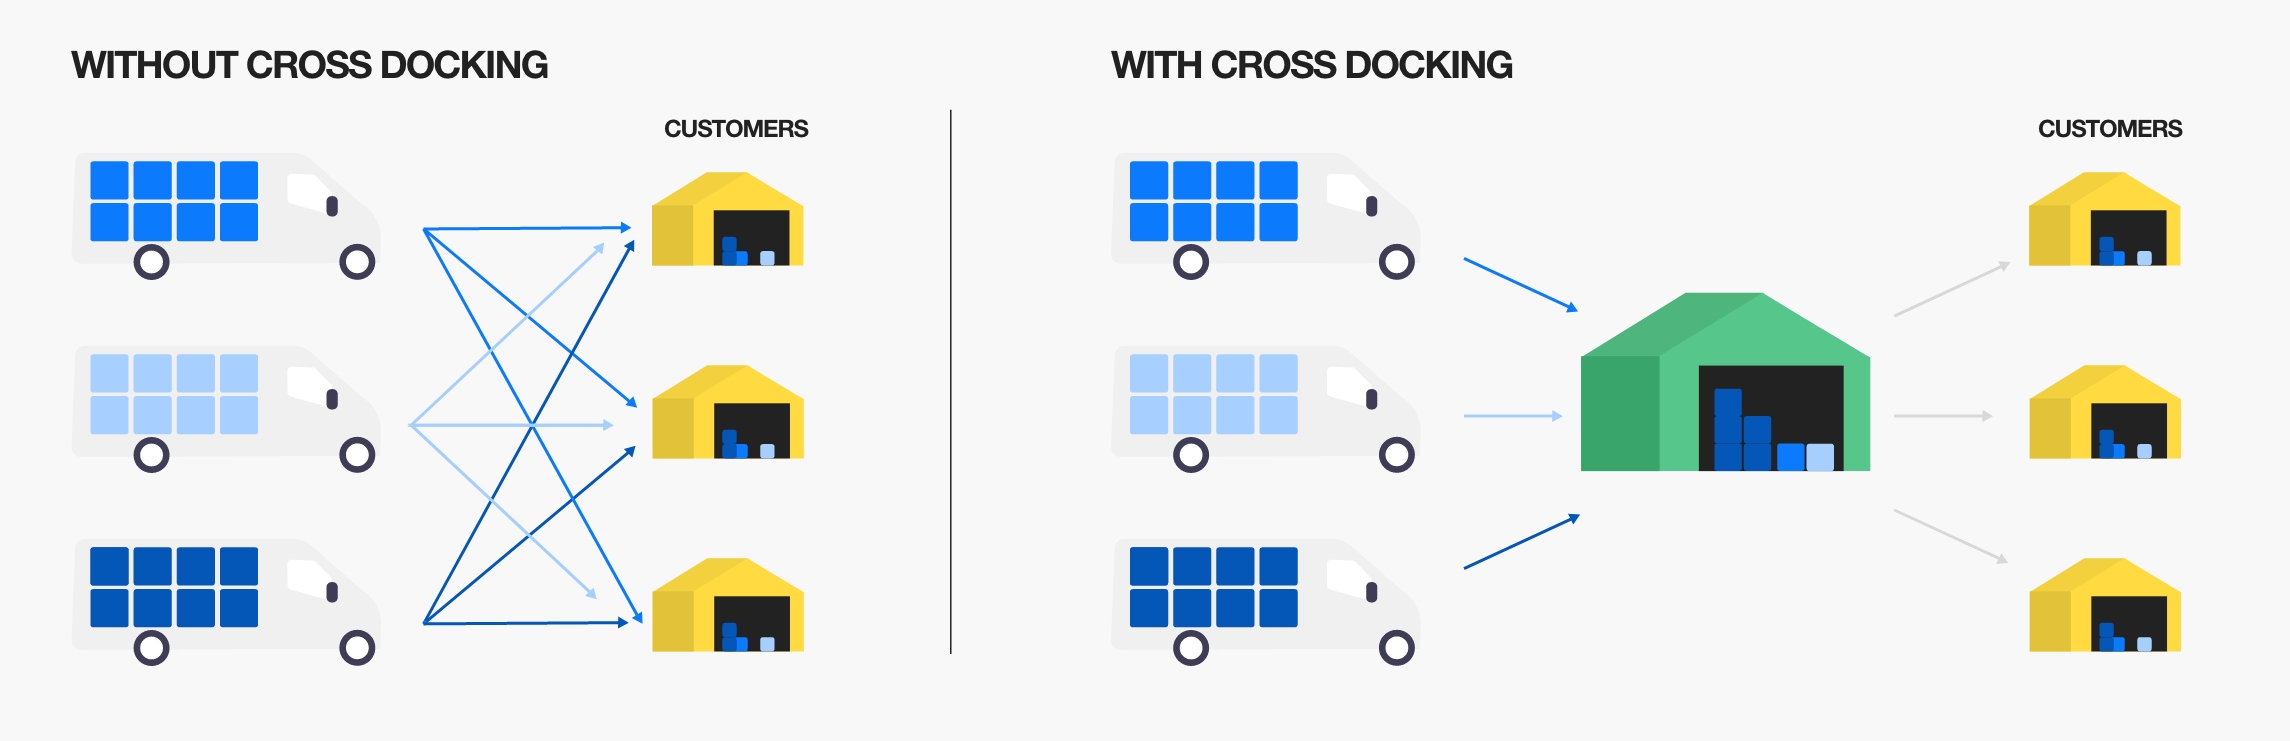 Scheme explaining how cross-docking eliminates unnecessary miles